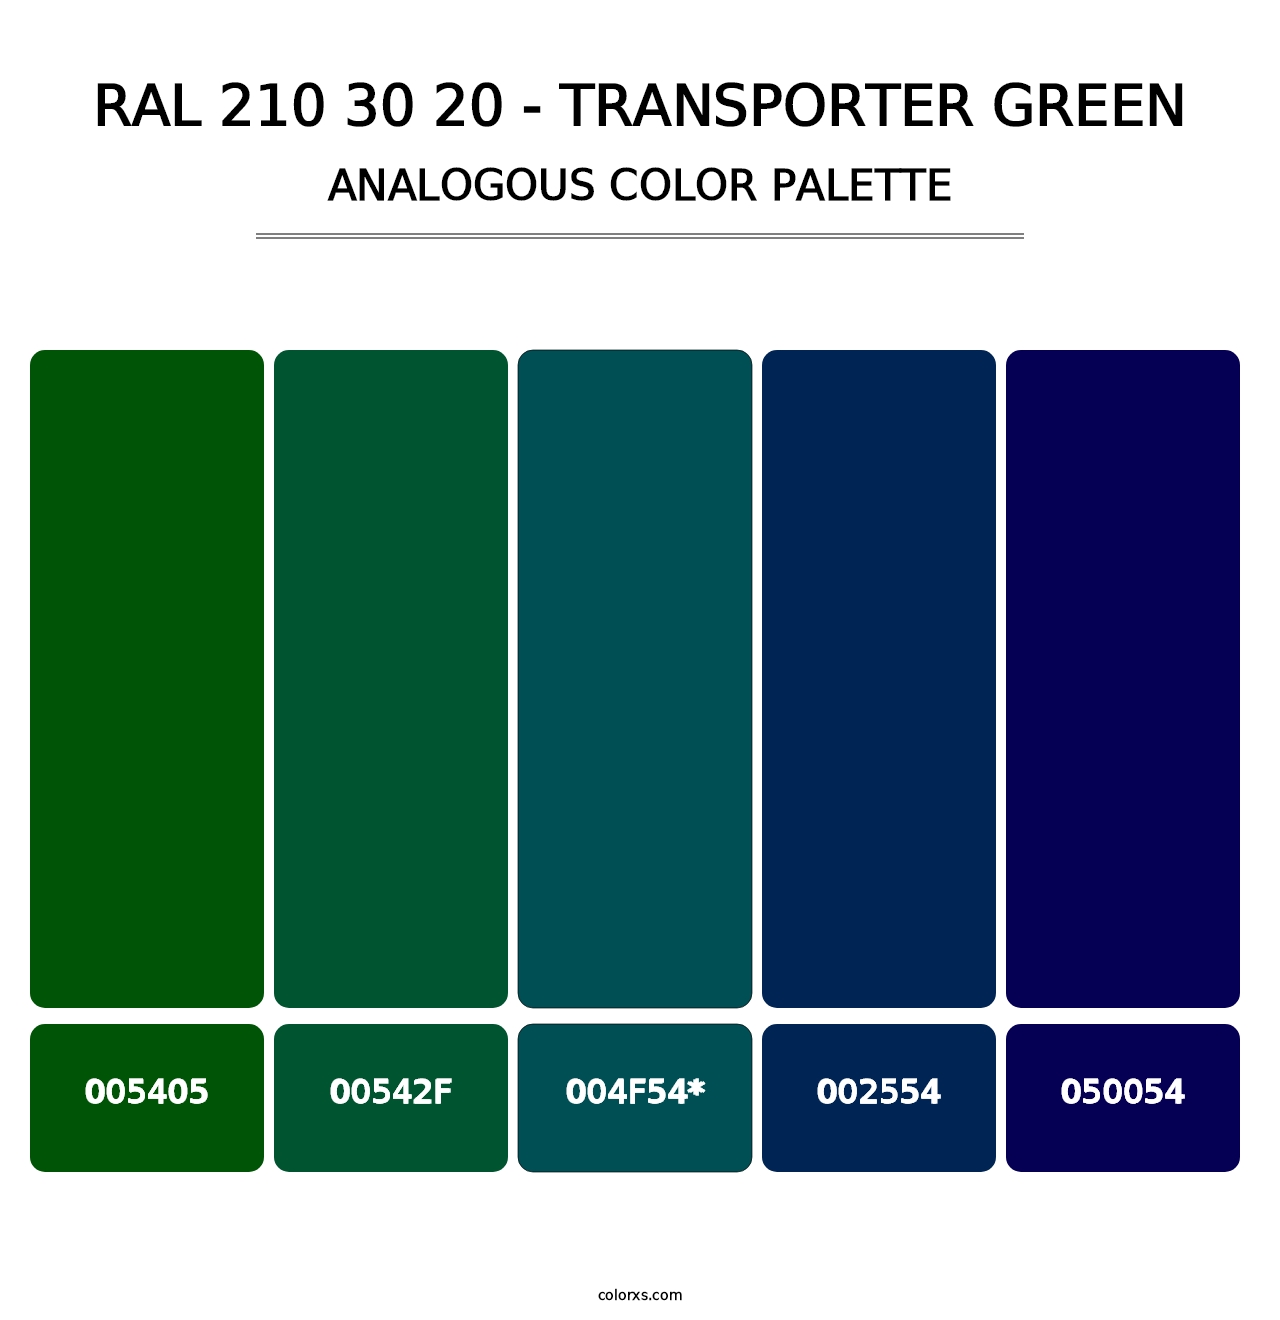 RAL 210 30 20 - Transporter Green - Analogous Color Palette